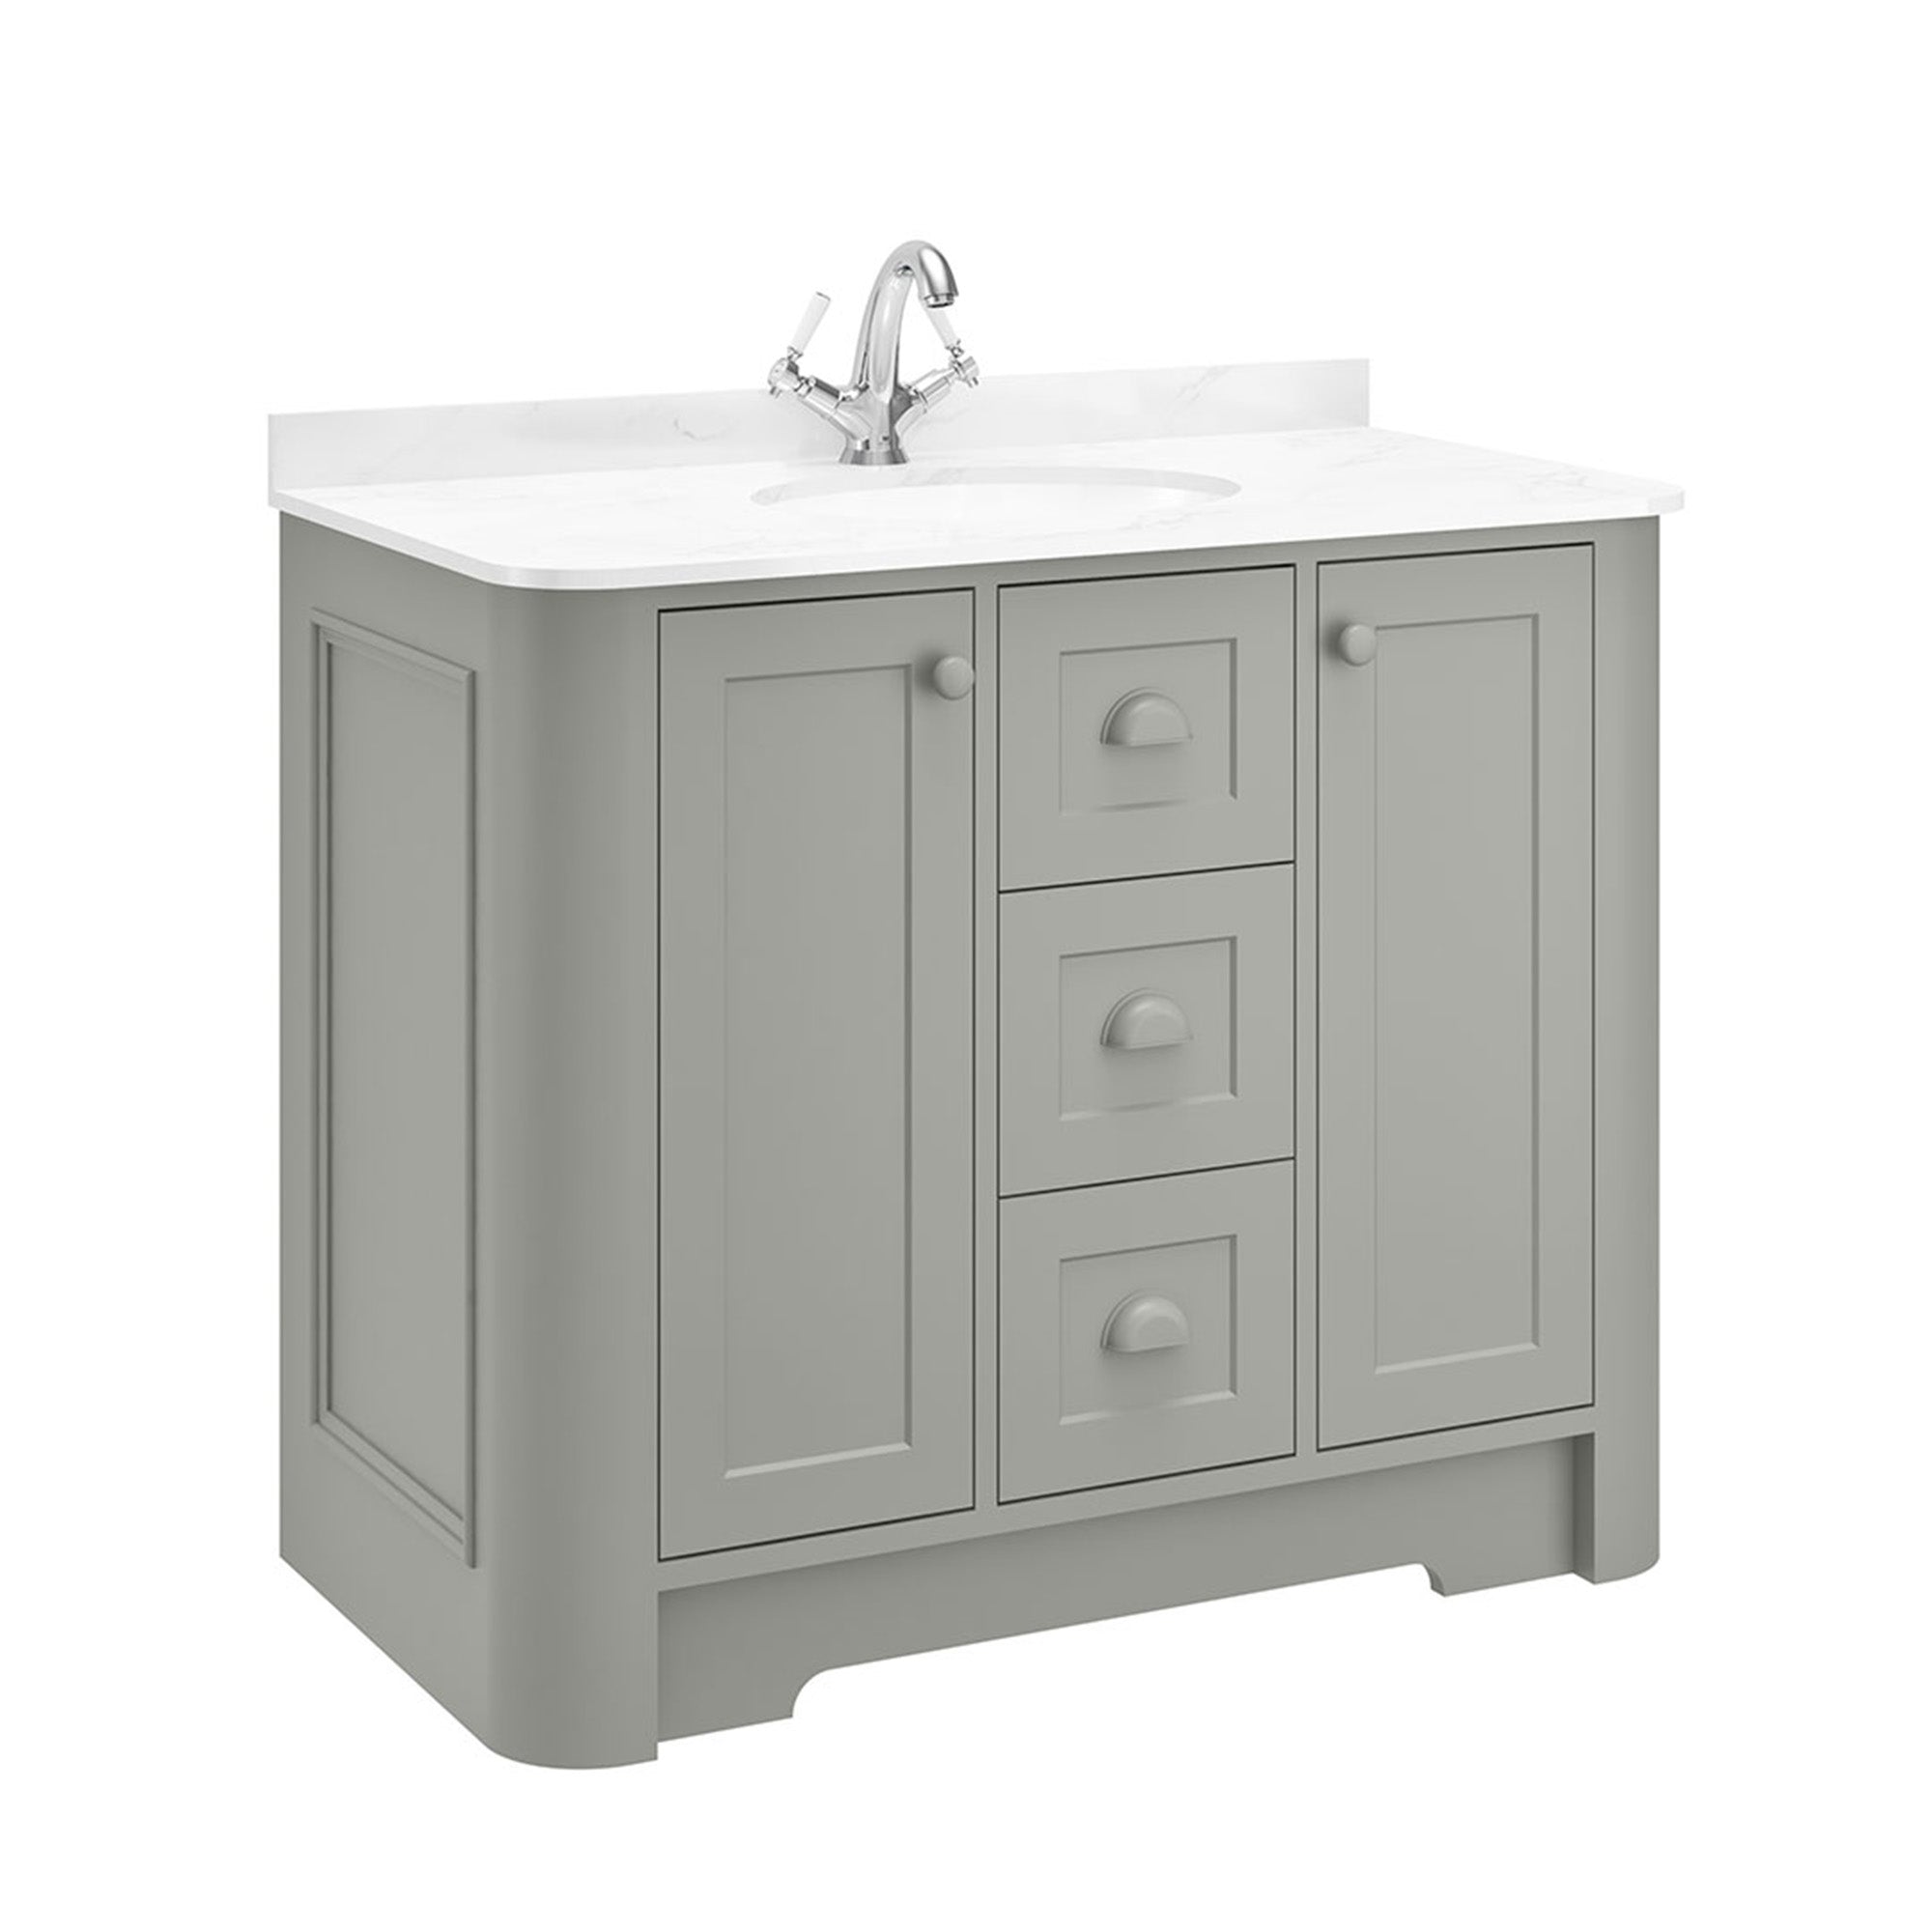 shrewsbury 1000 single basin floor standing vanity unit with carrara marble worktop dove grey